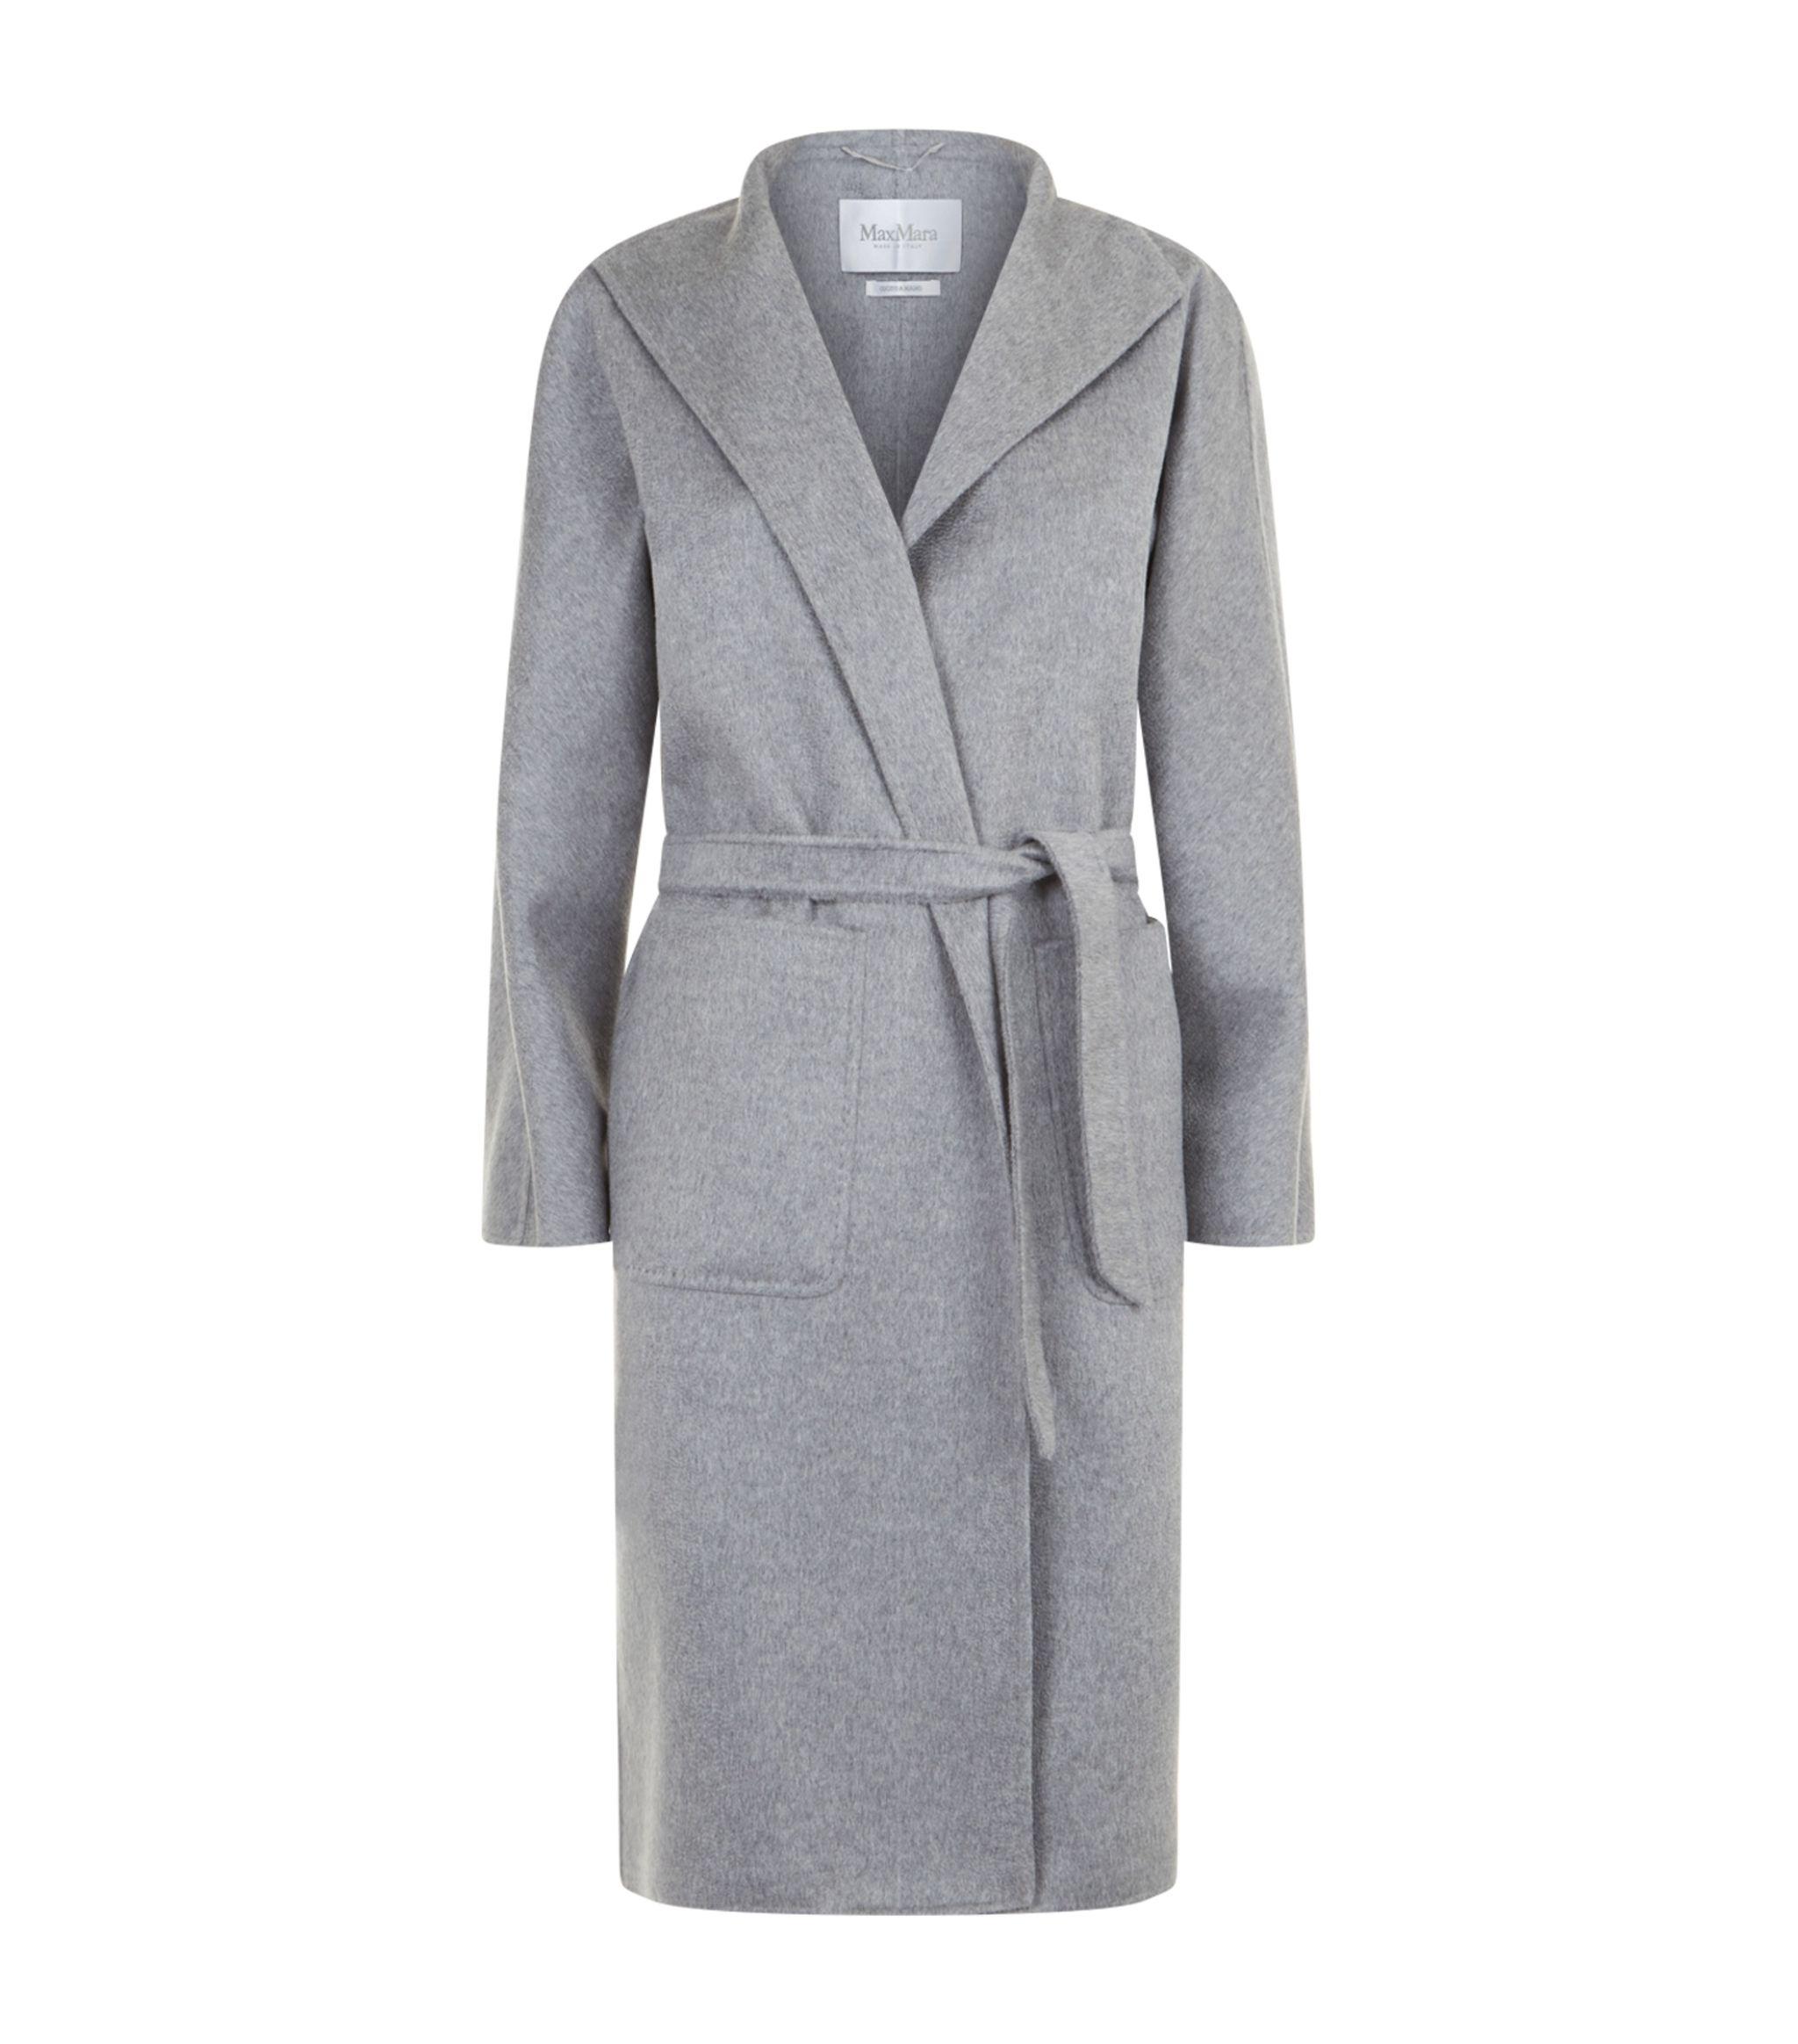 Max Mara Lilia Cashmere Coat in Grey (Grey) - Save 14% - Lyst